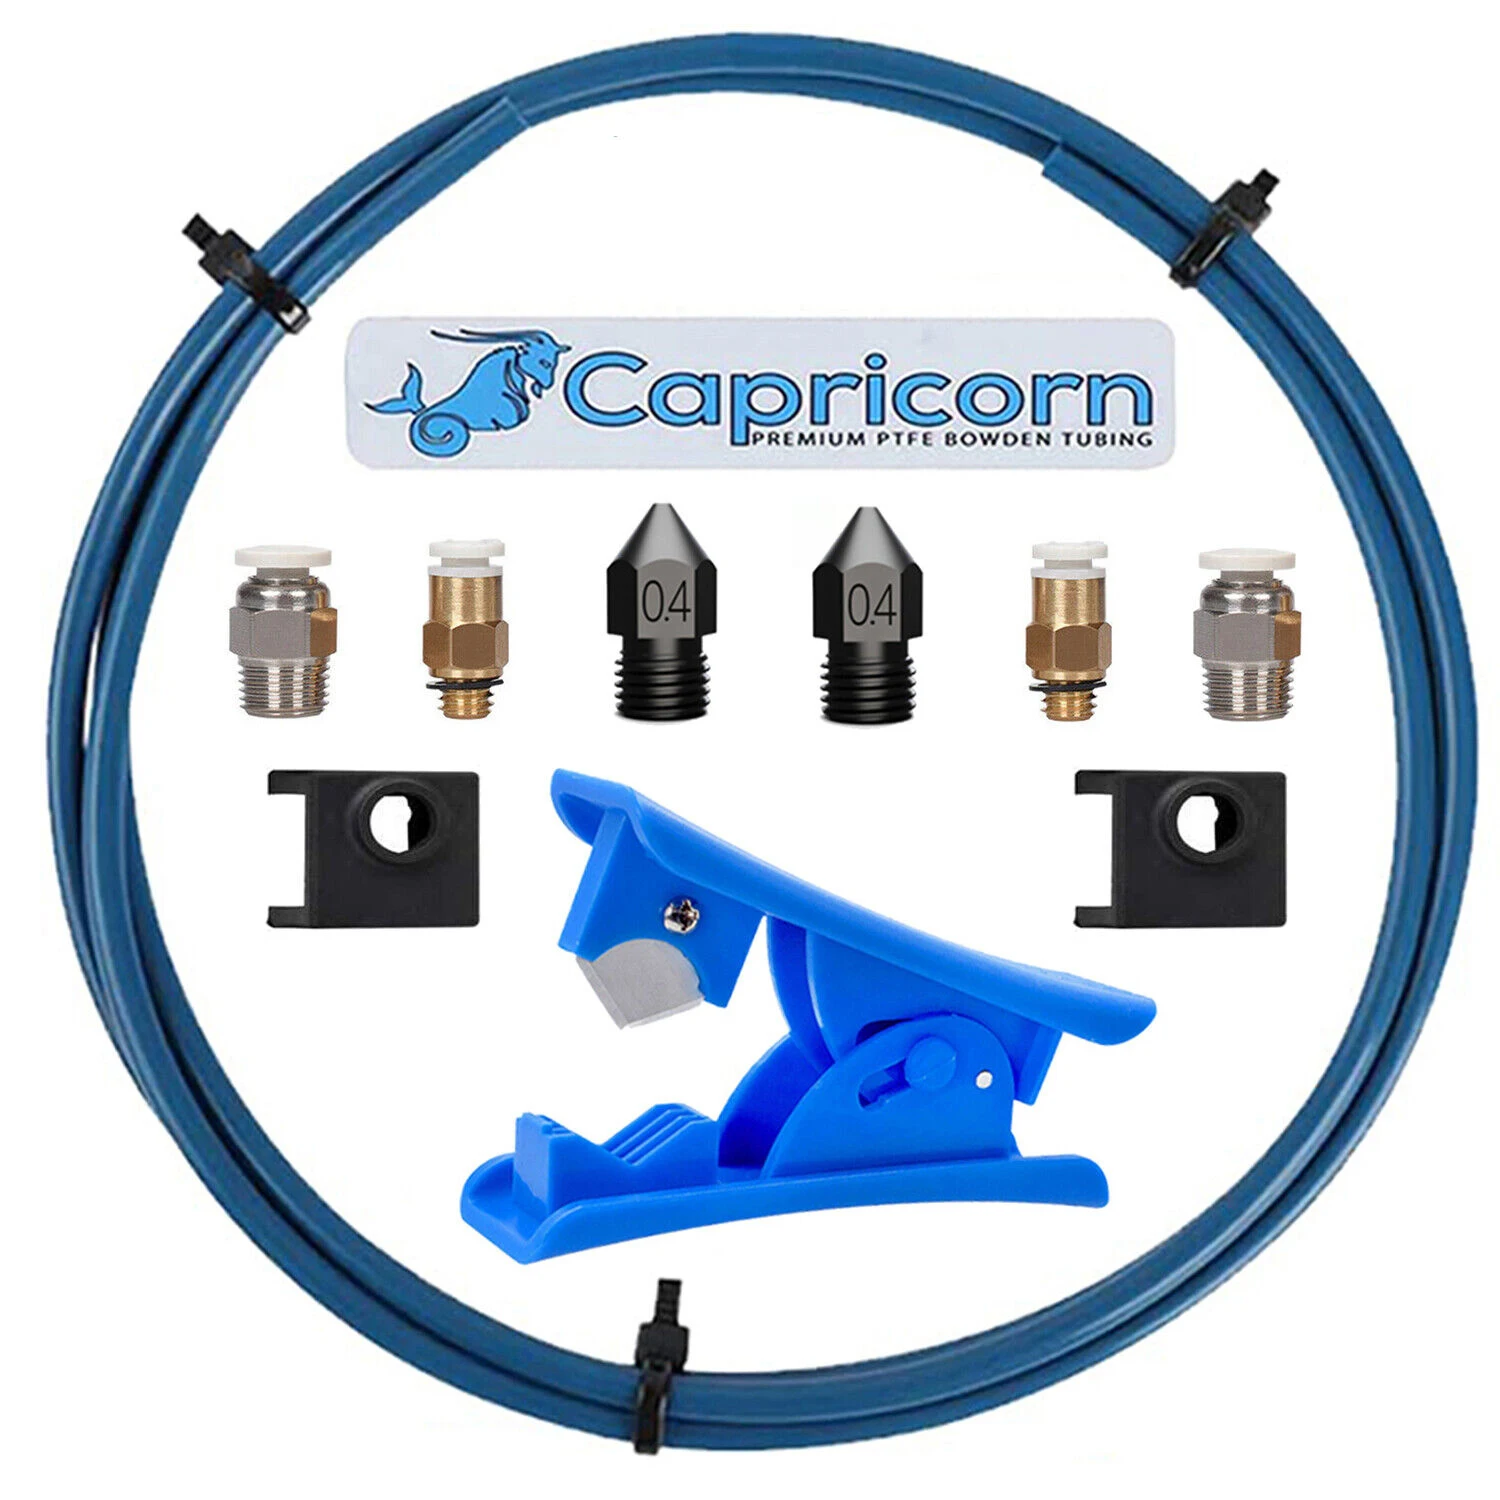 Creality 3D Capricorn Bowden PTFE Tubing XS Serie Blue 1M Tube Quick Fitting 1Pcs Pneumatic Fitting Push 1.75mm Filament